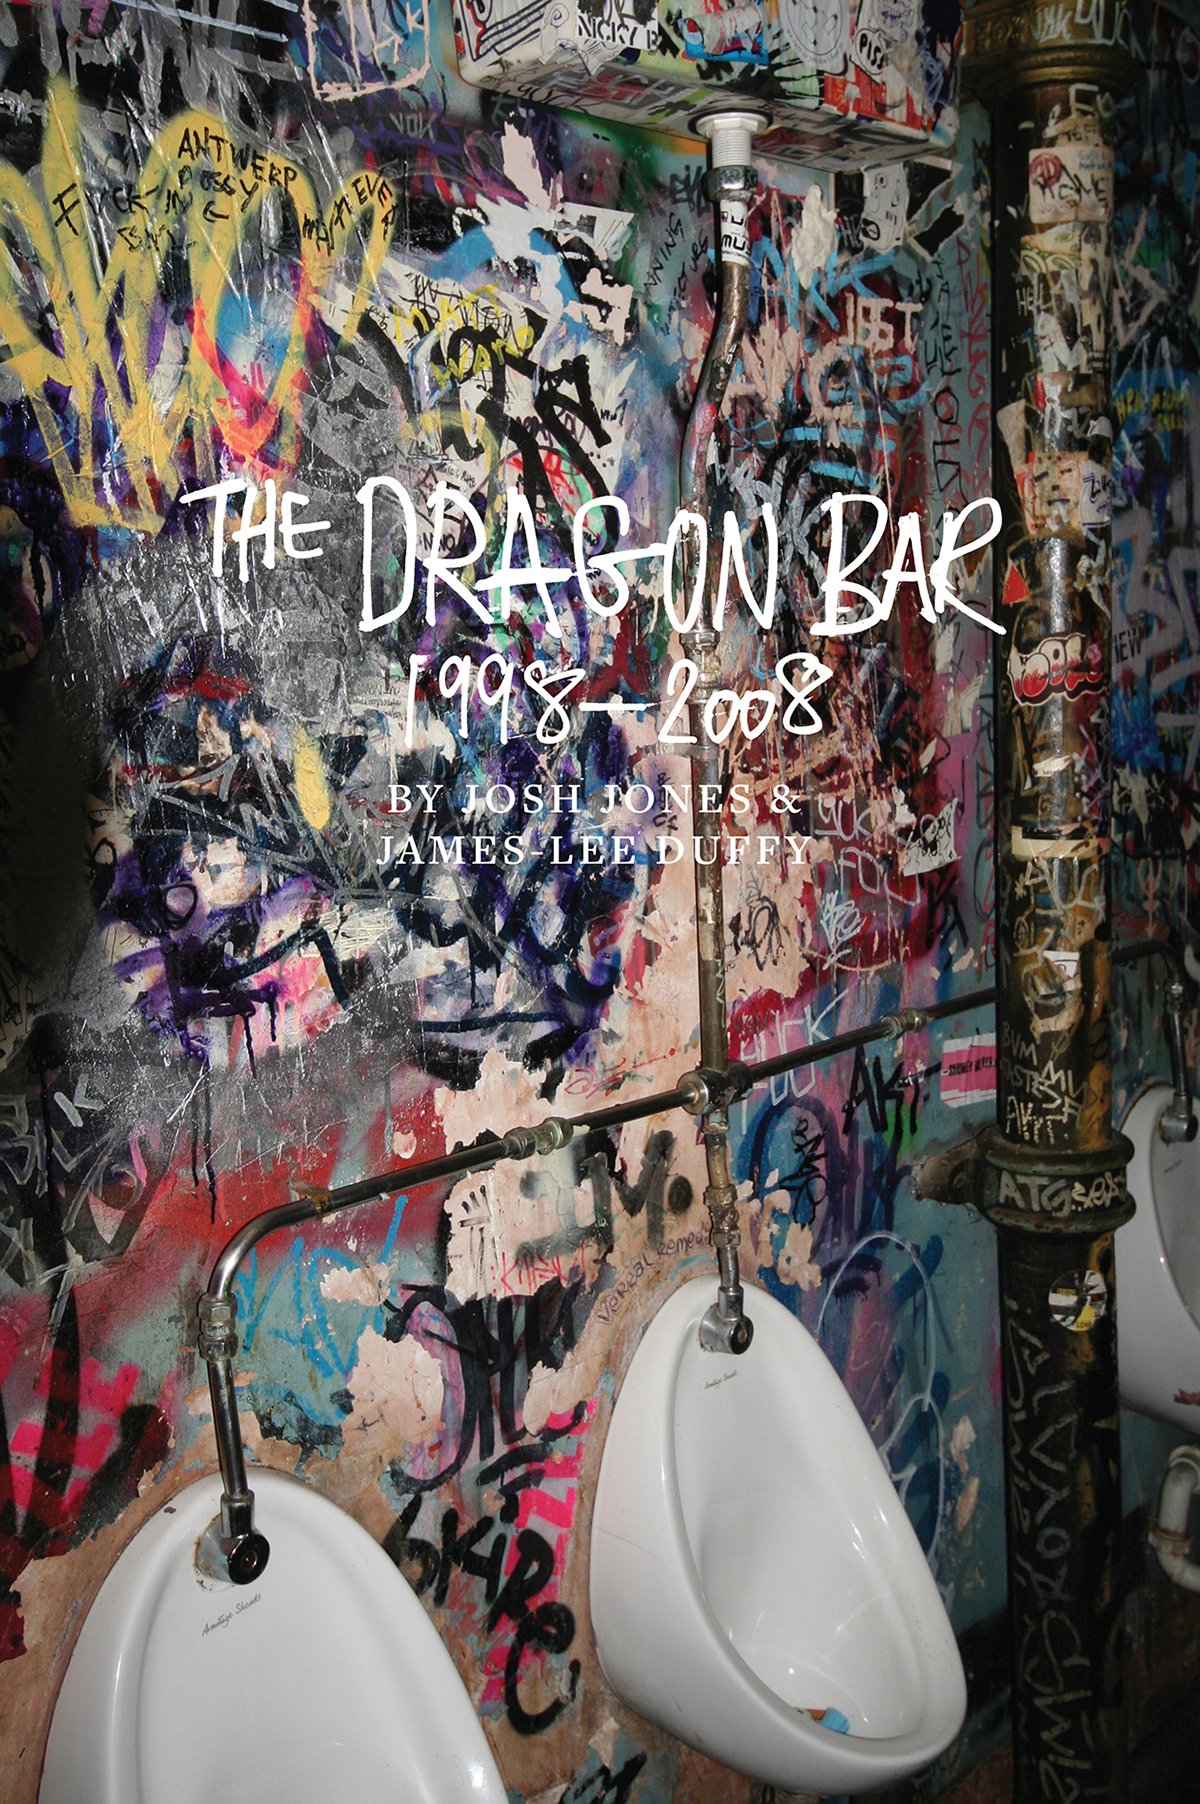 The Dragon Bar Josh Jones James-Lee Duffy Pavement Licker Cover.jpg